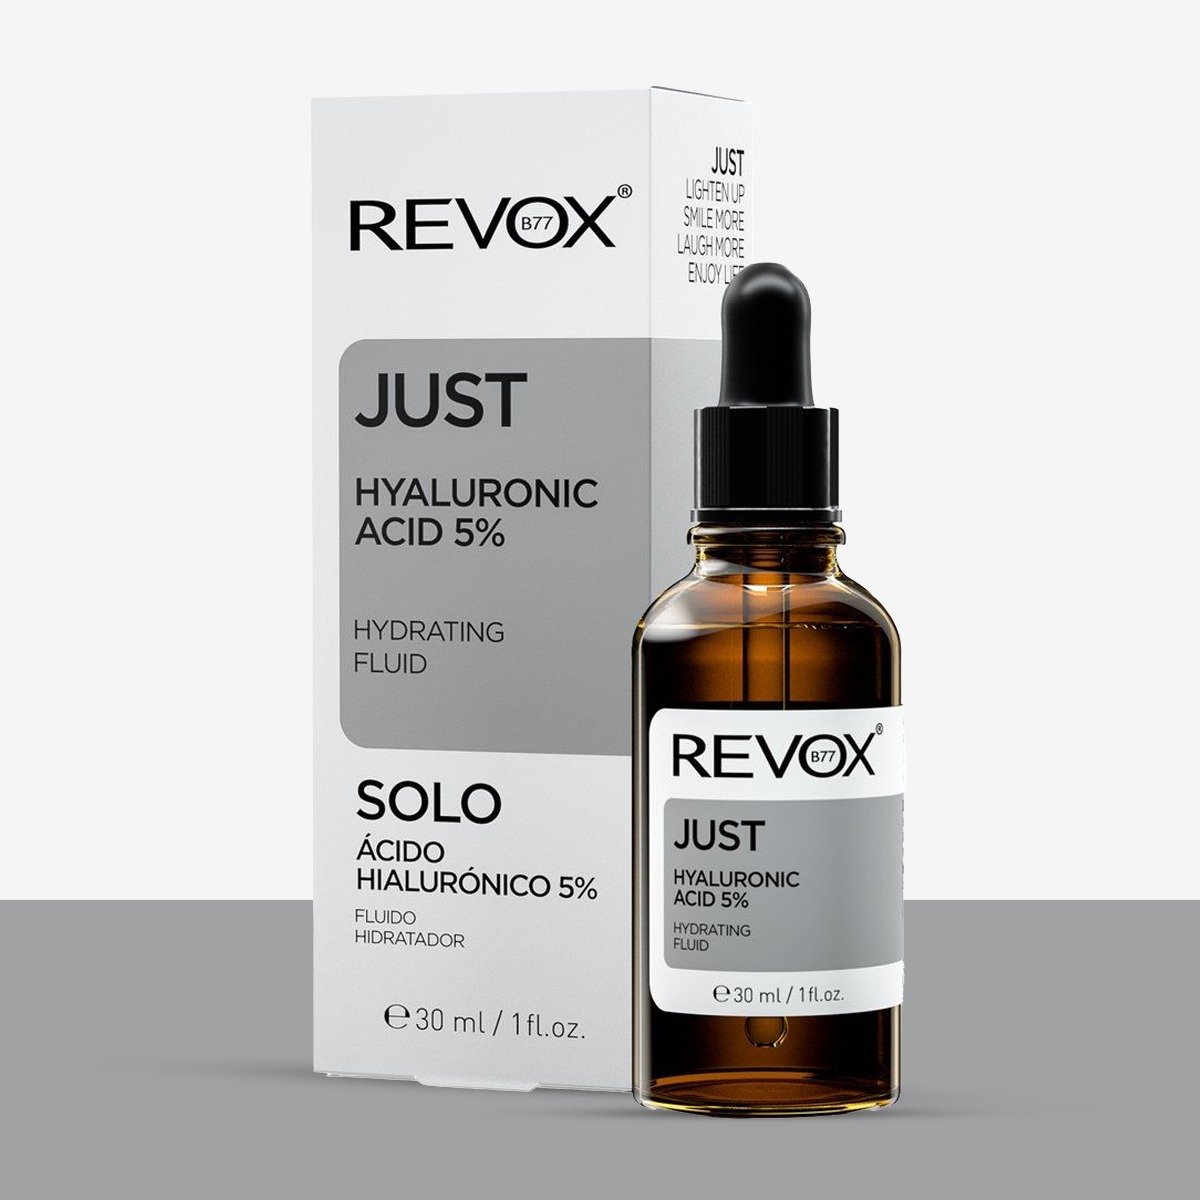 Revox Just Hyaluronic Acid 5% Hydrating Fluid Serum